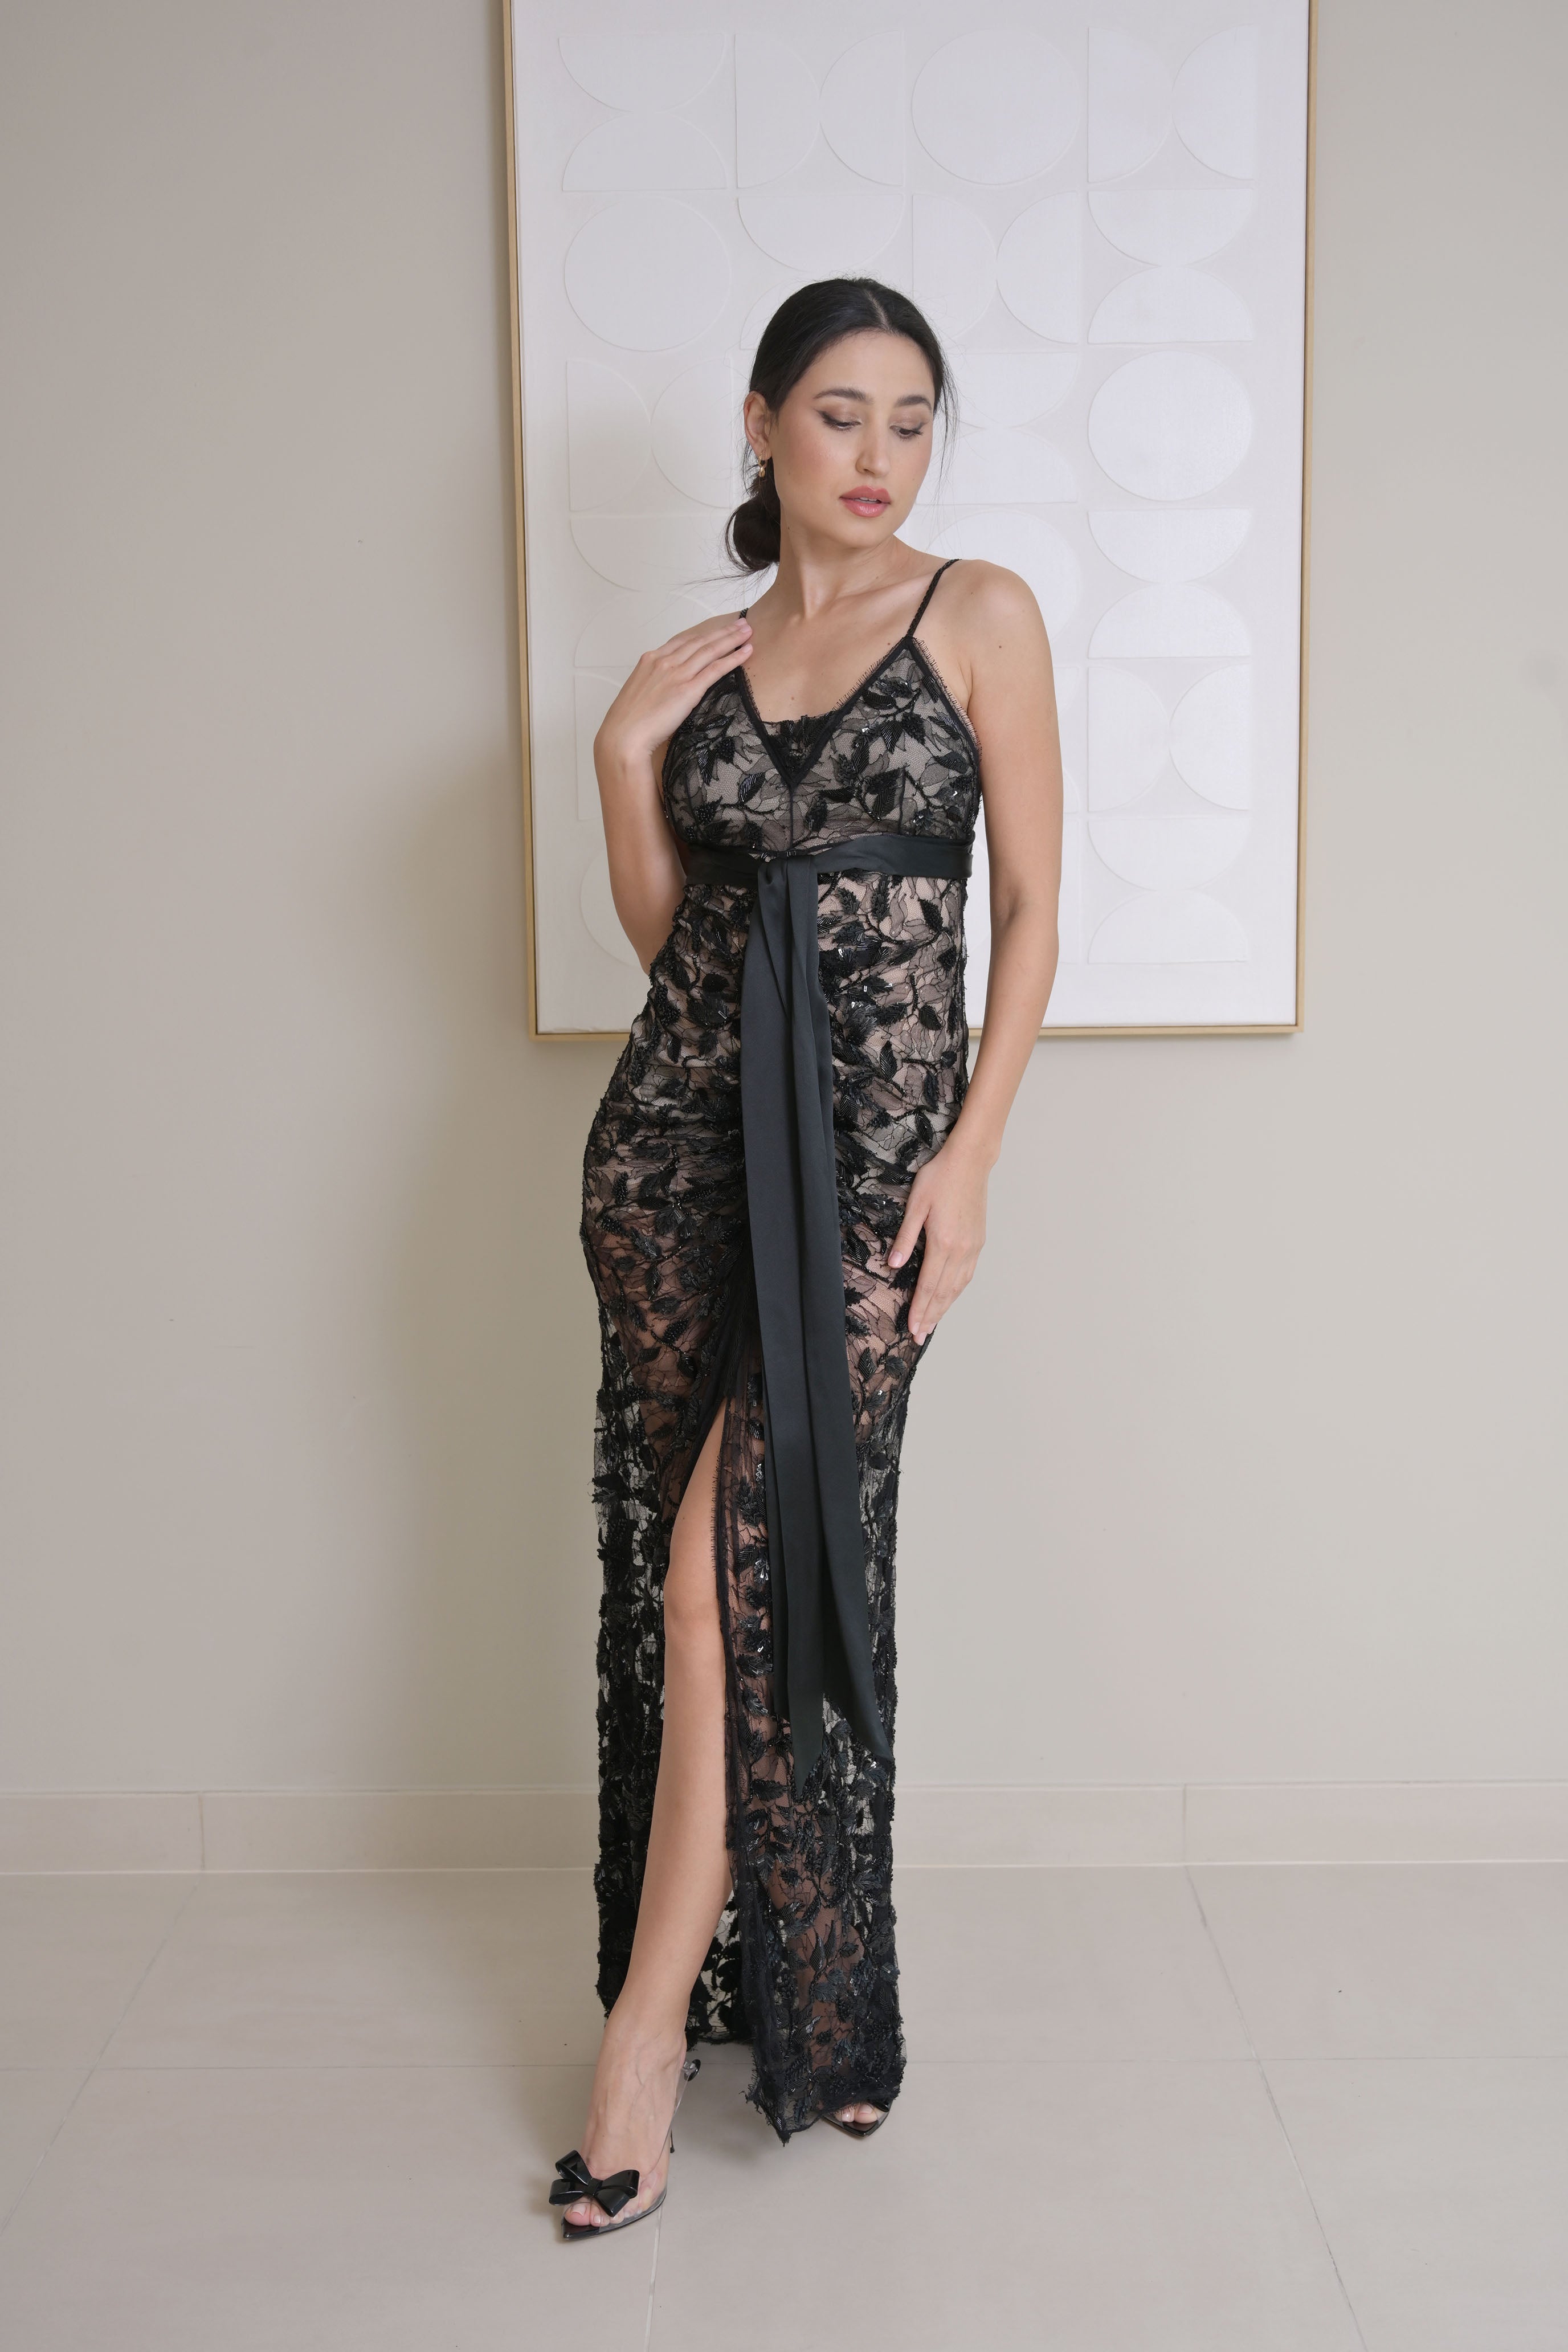 Black stunning lace mermaid long dress - ROBERTO CAVALLI